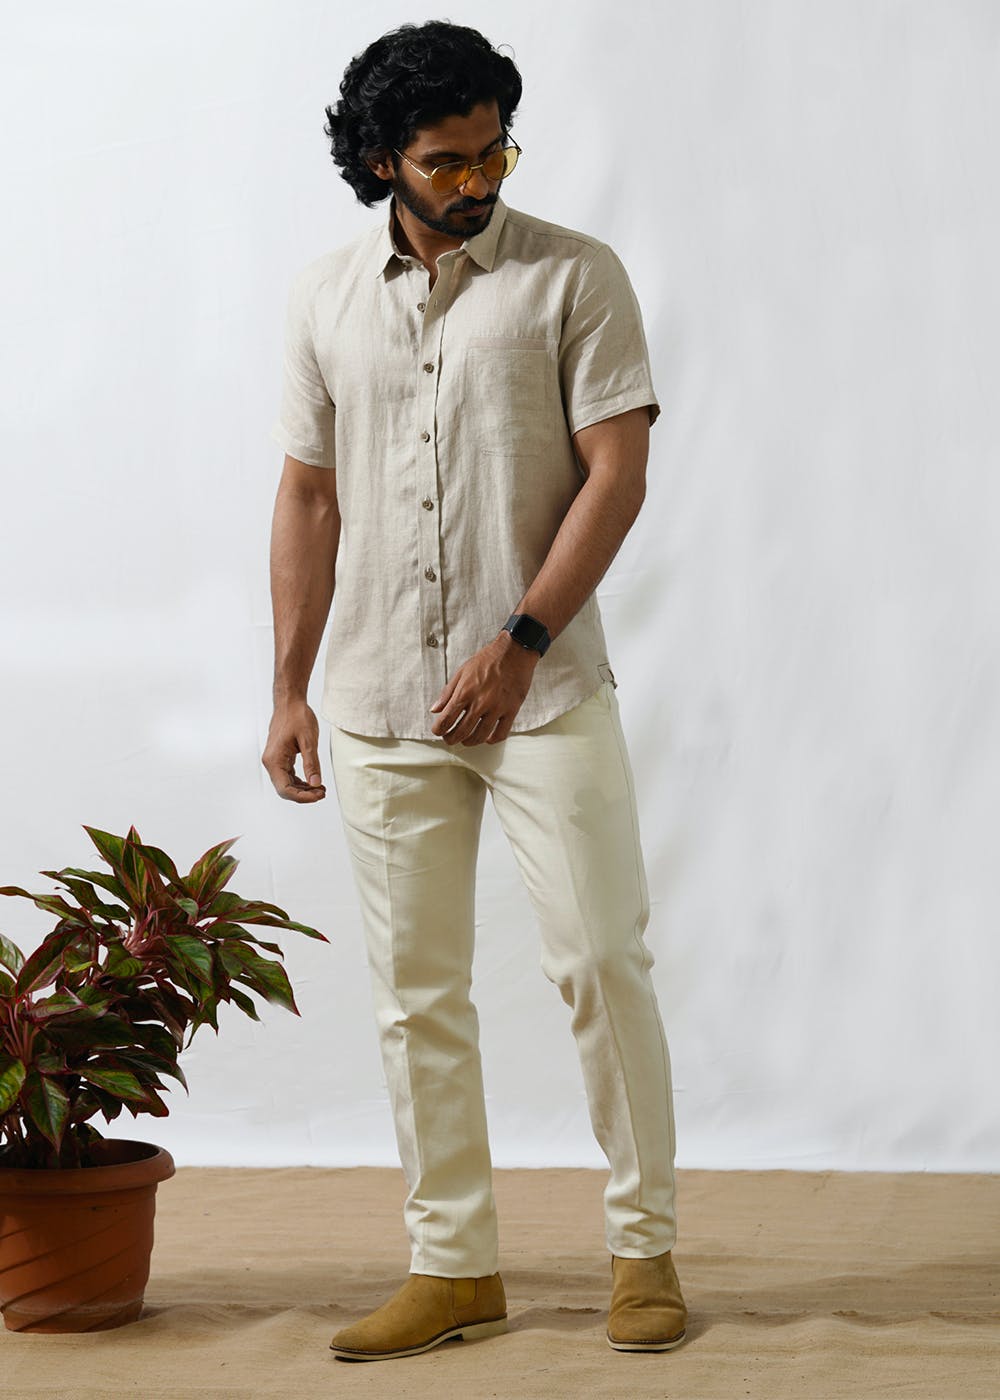 7083 White Shirt Beige Pants Images Stock Photos  Vectors  Shutterstock